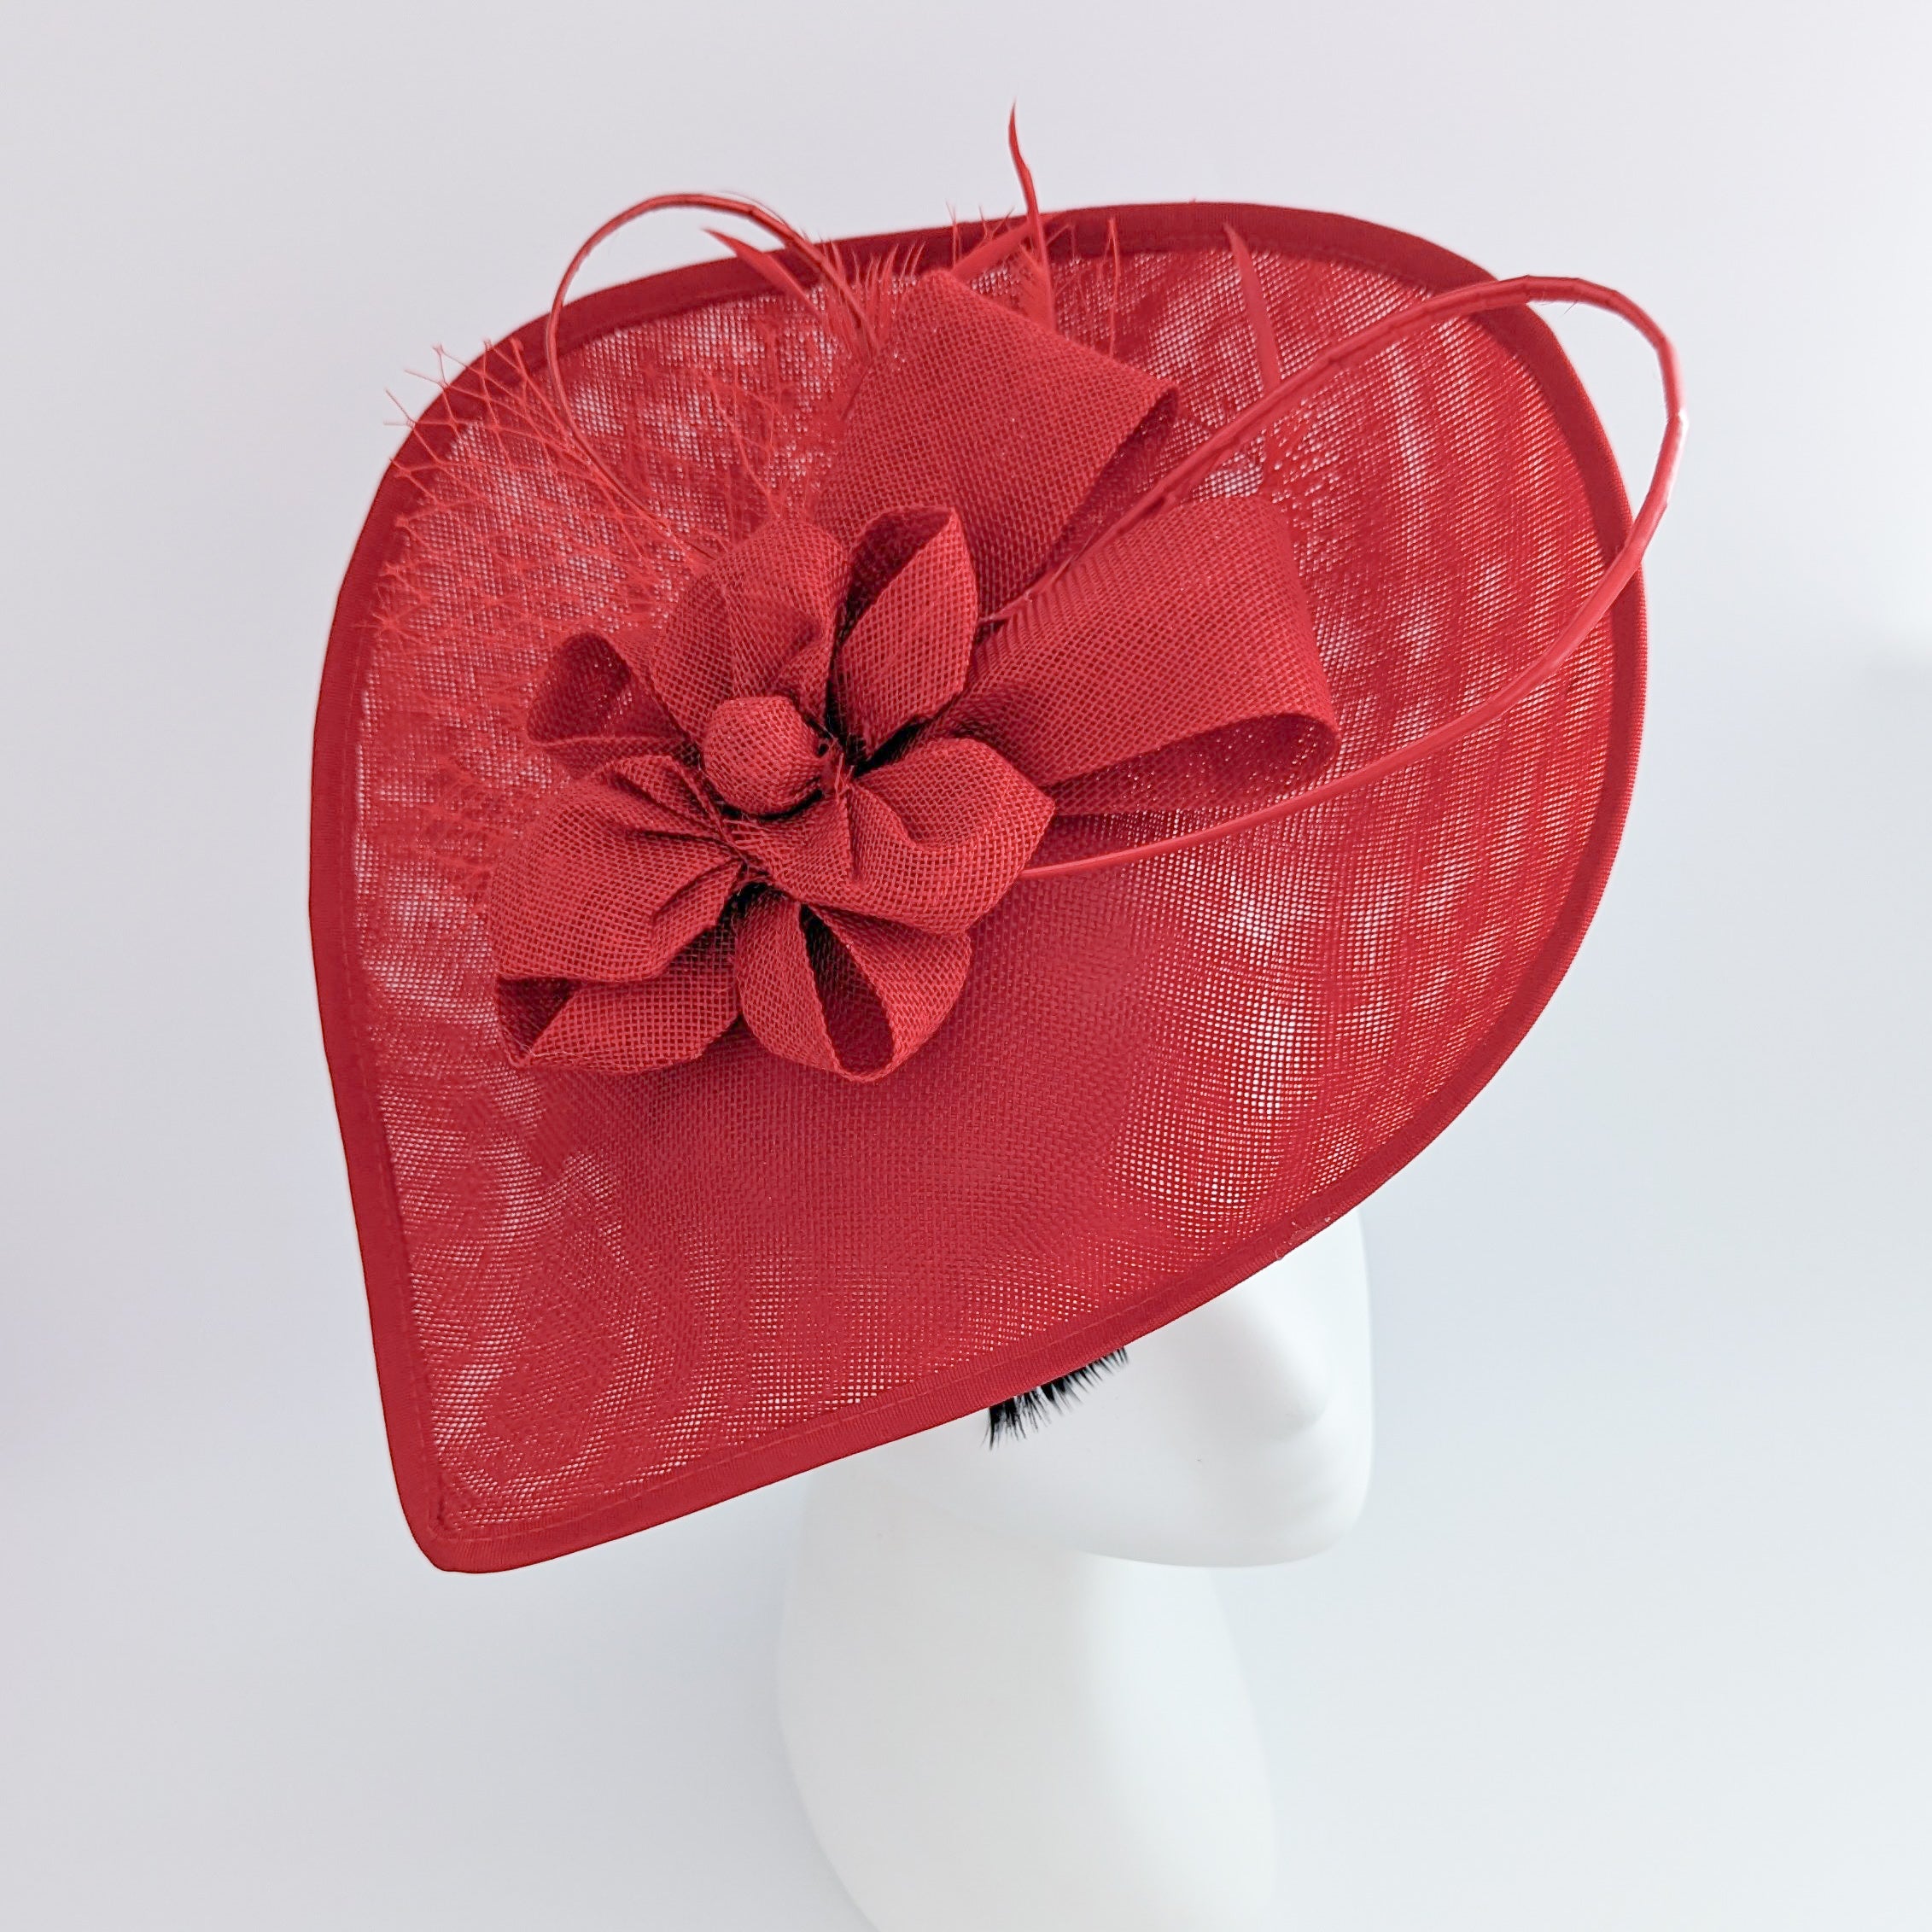 Red large teardrop flower feather fascinator hat